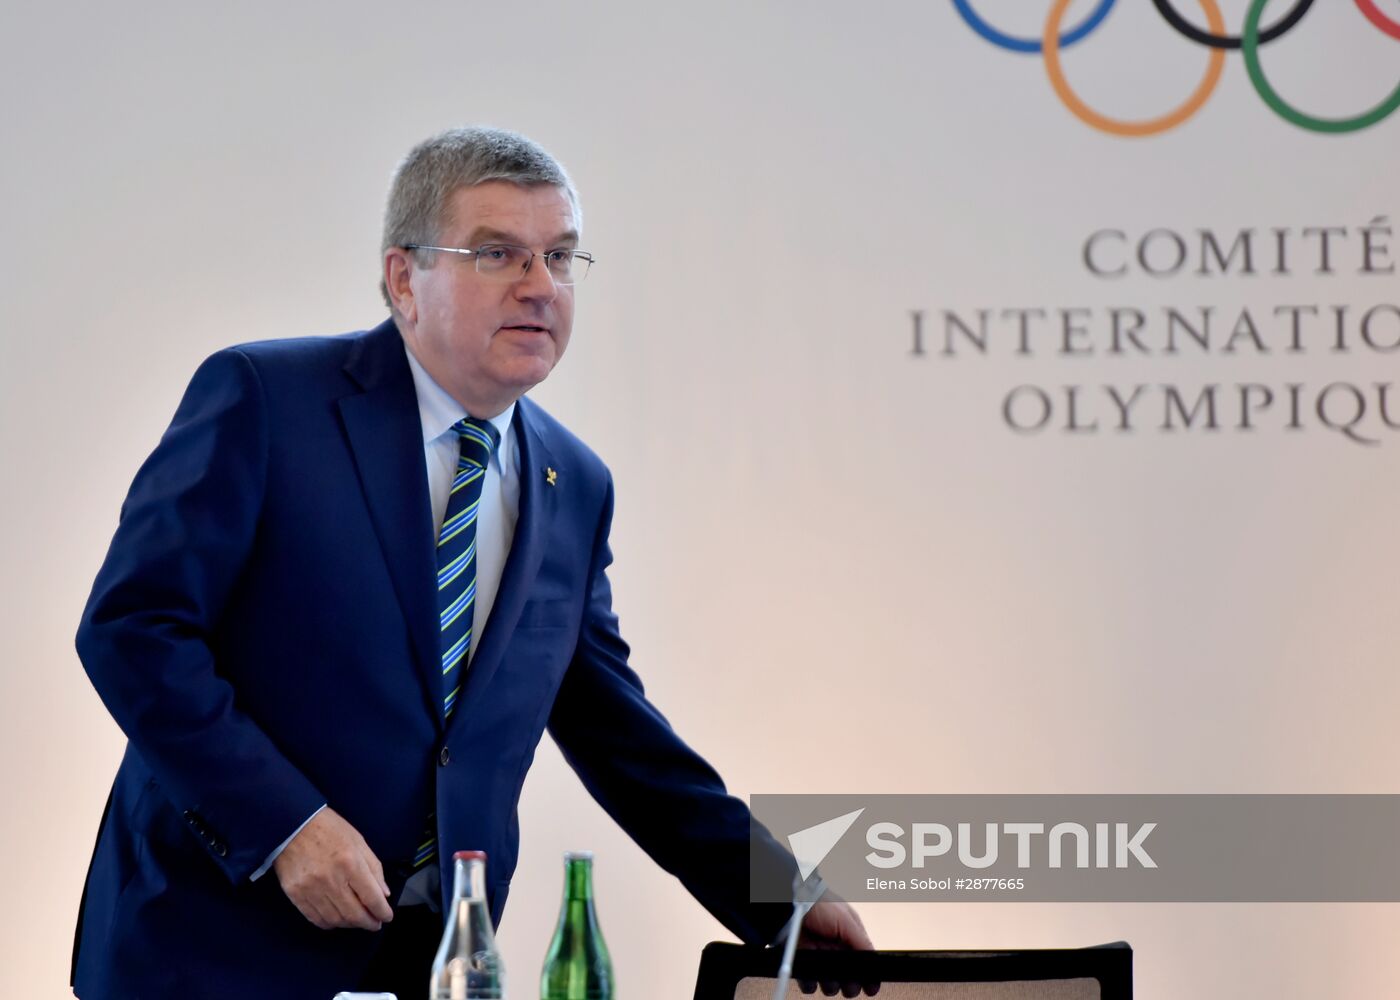 Lausanne hosts IOC summit